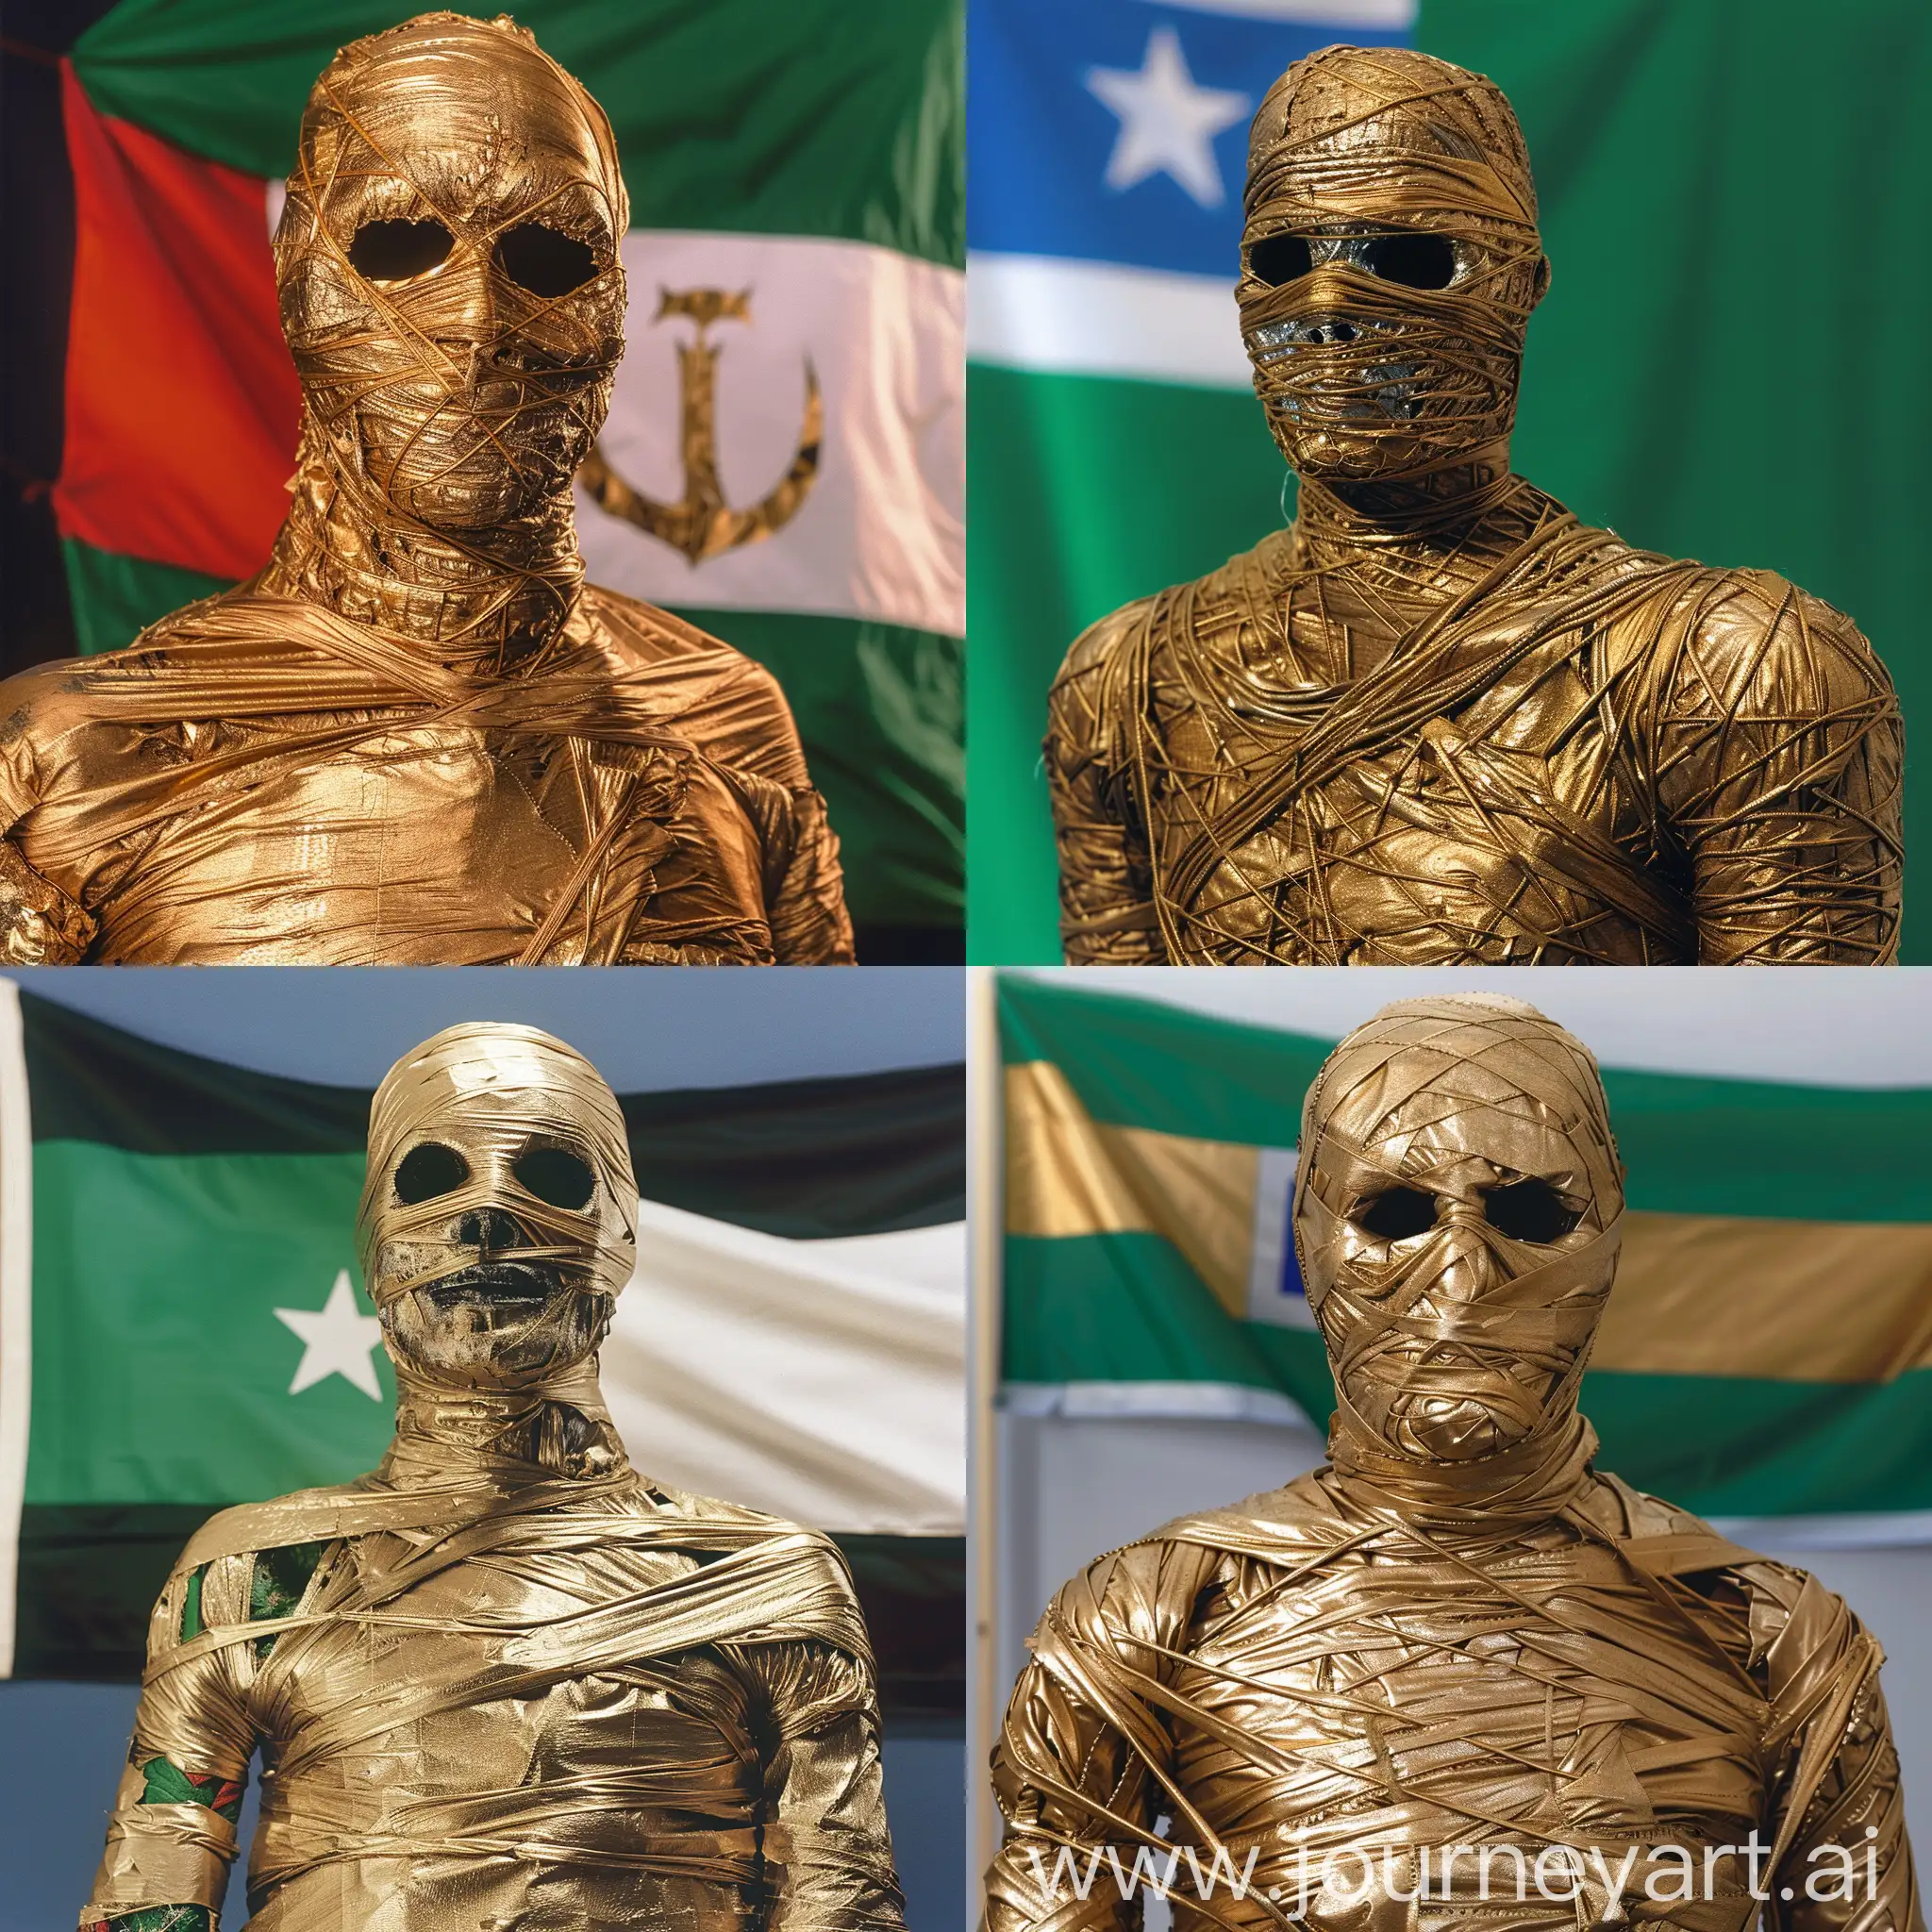 Golden-Bandage-Mummy-with-Algeria-Flag-Ancient-Egyptian-Tribute